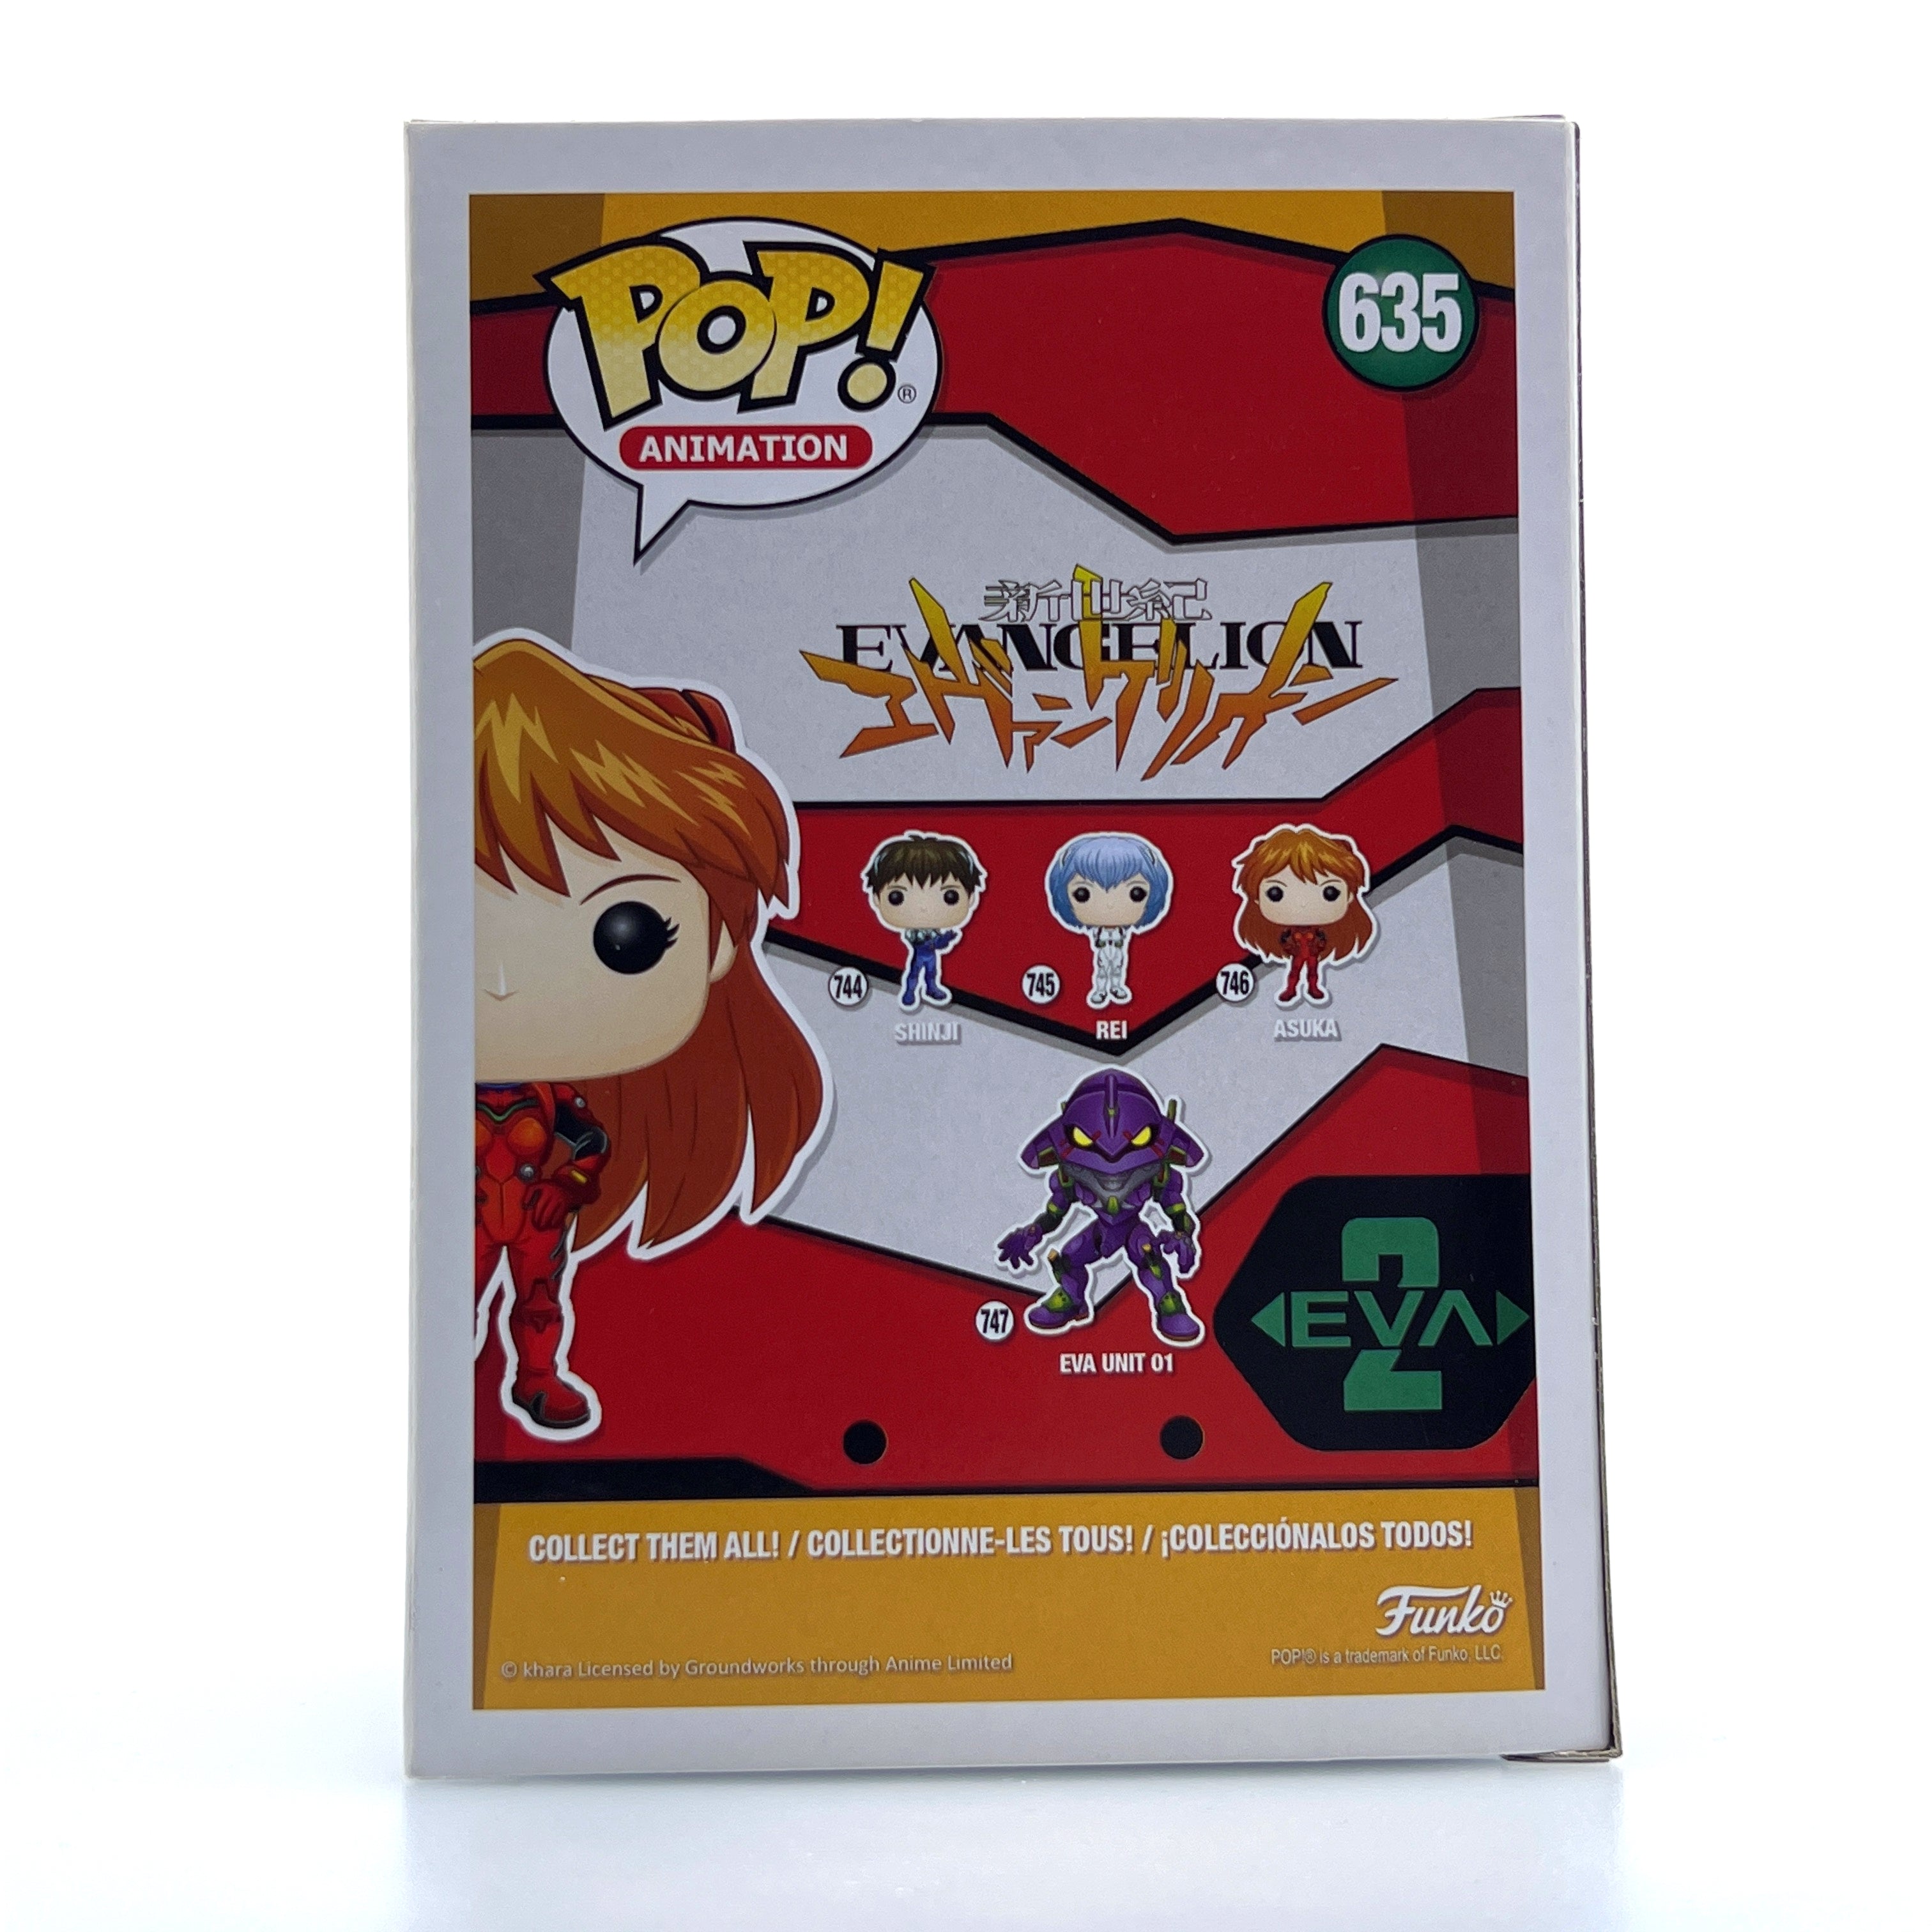 Funko Pop Anime Evangelion Asuka Neon Red Suit 635